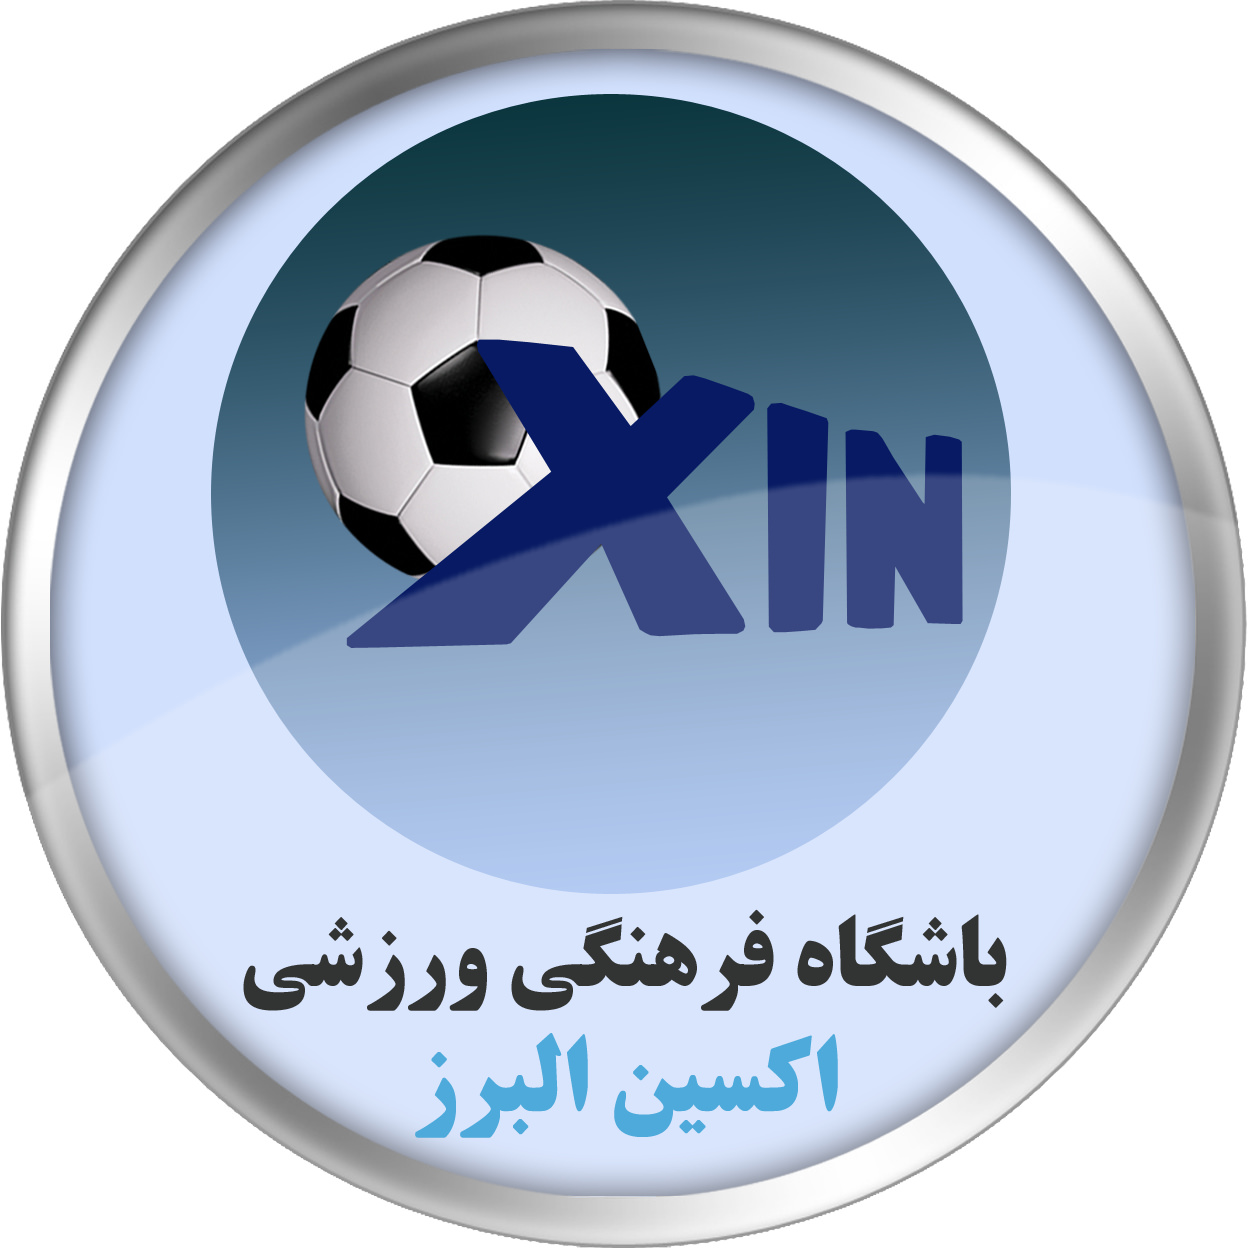 Gol Reyhan Alborz team logo